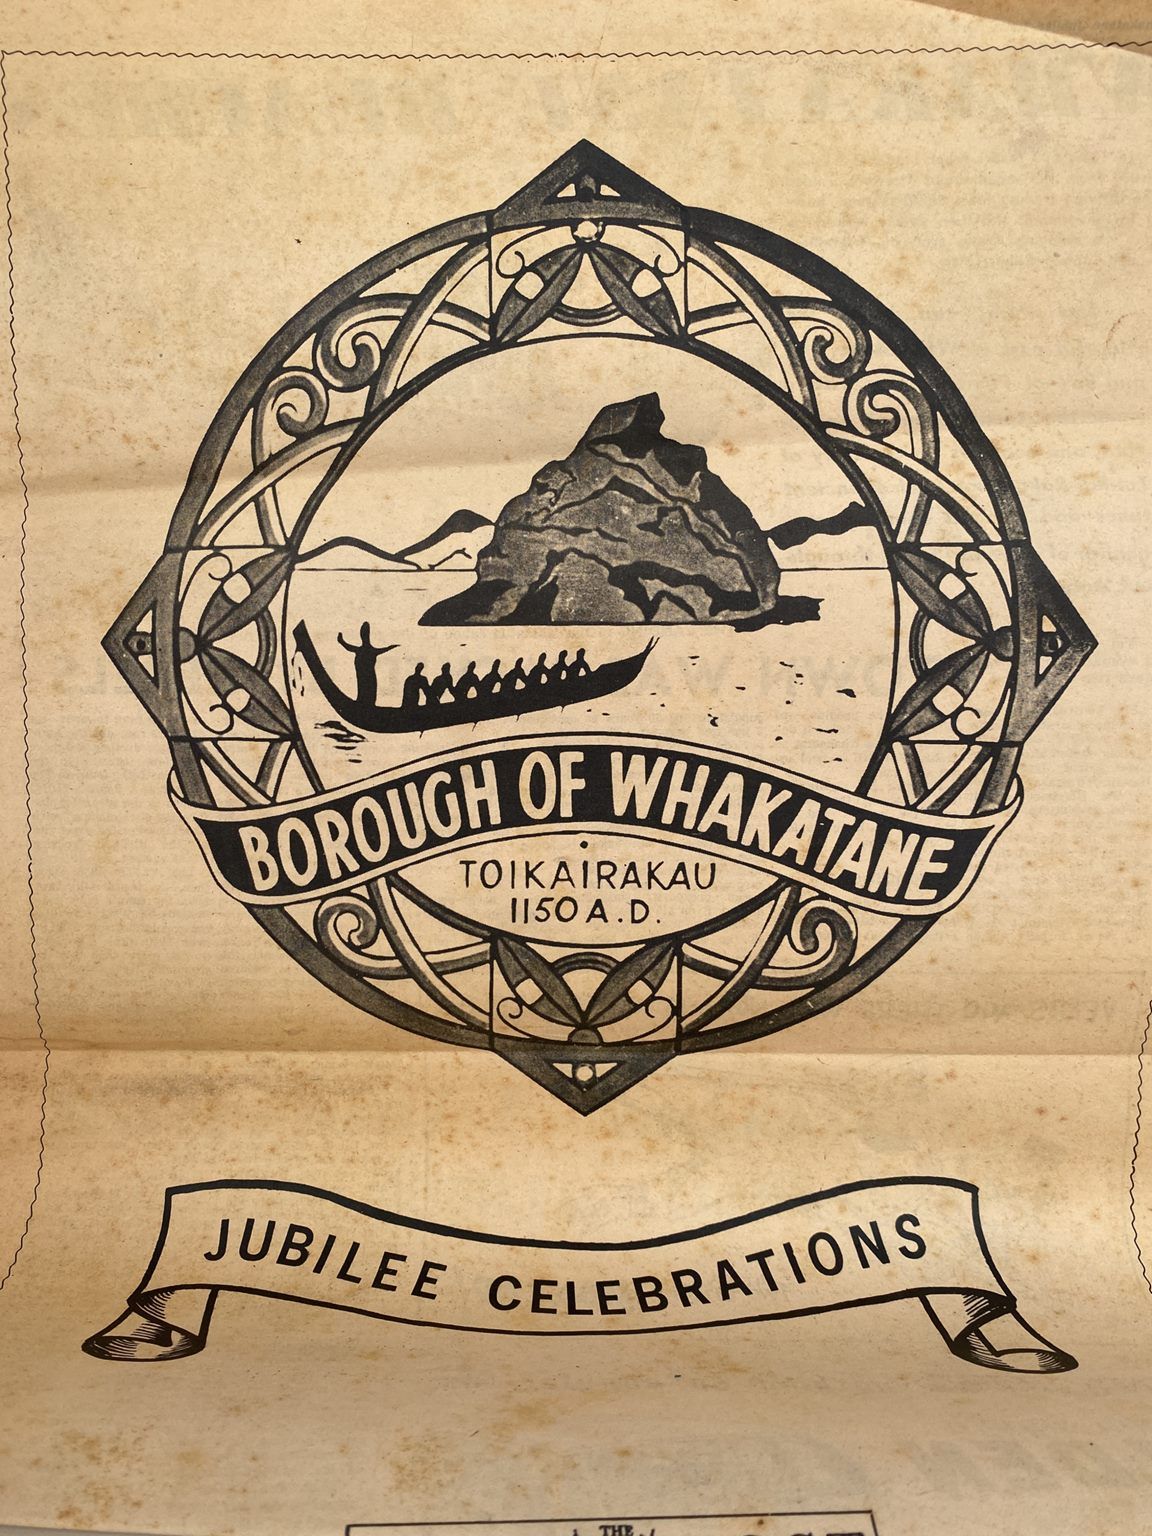 OLD NEWSPAPER: The Daily Post, Whakatane - Borough Jubilee Celebrations 1967